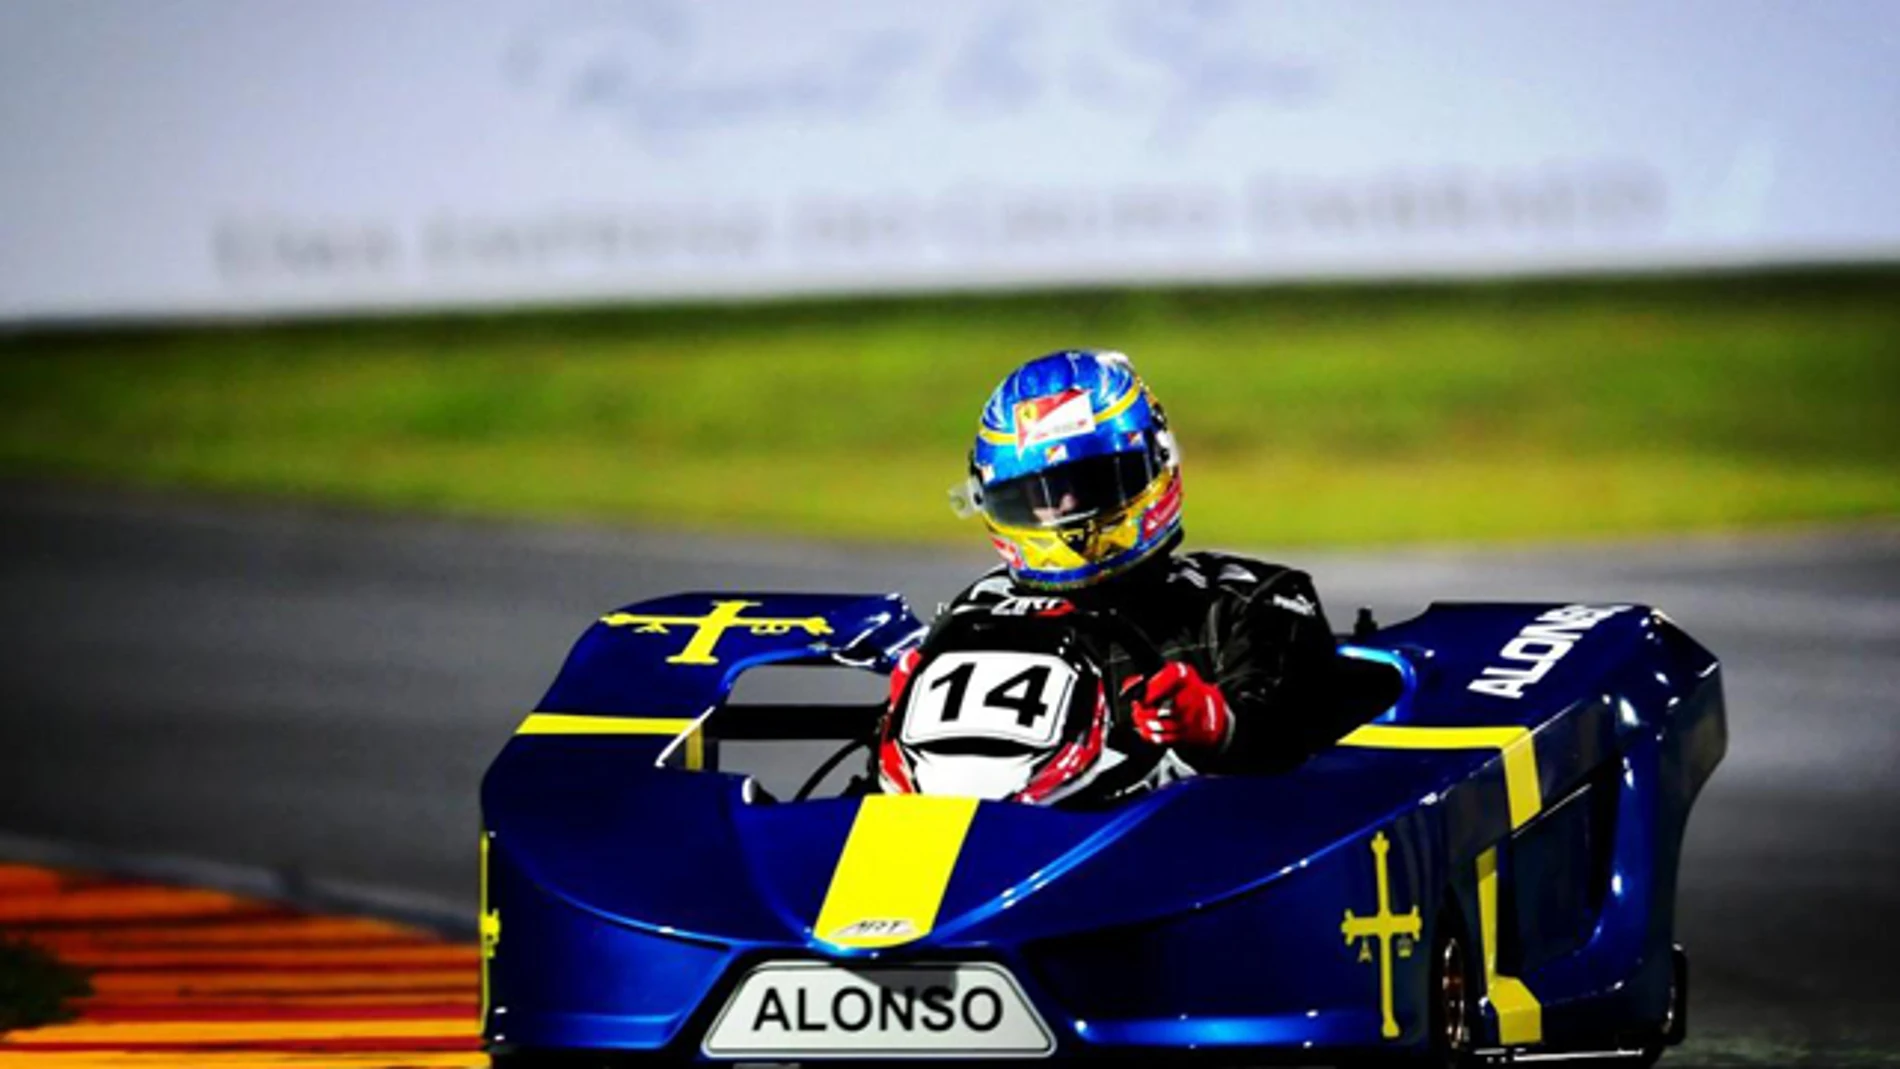 Alonso maneja su kart